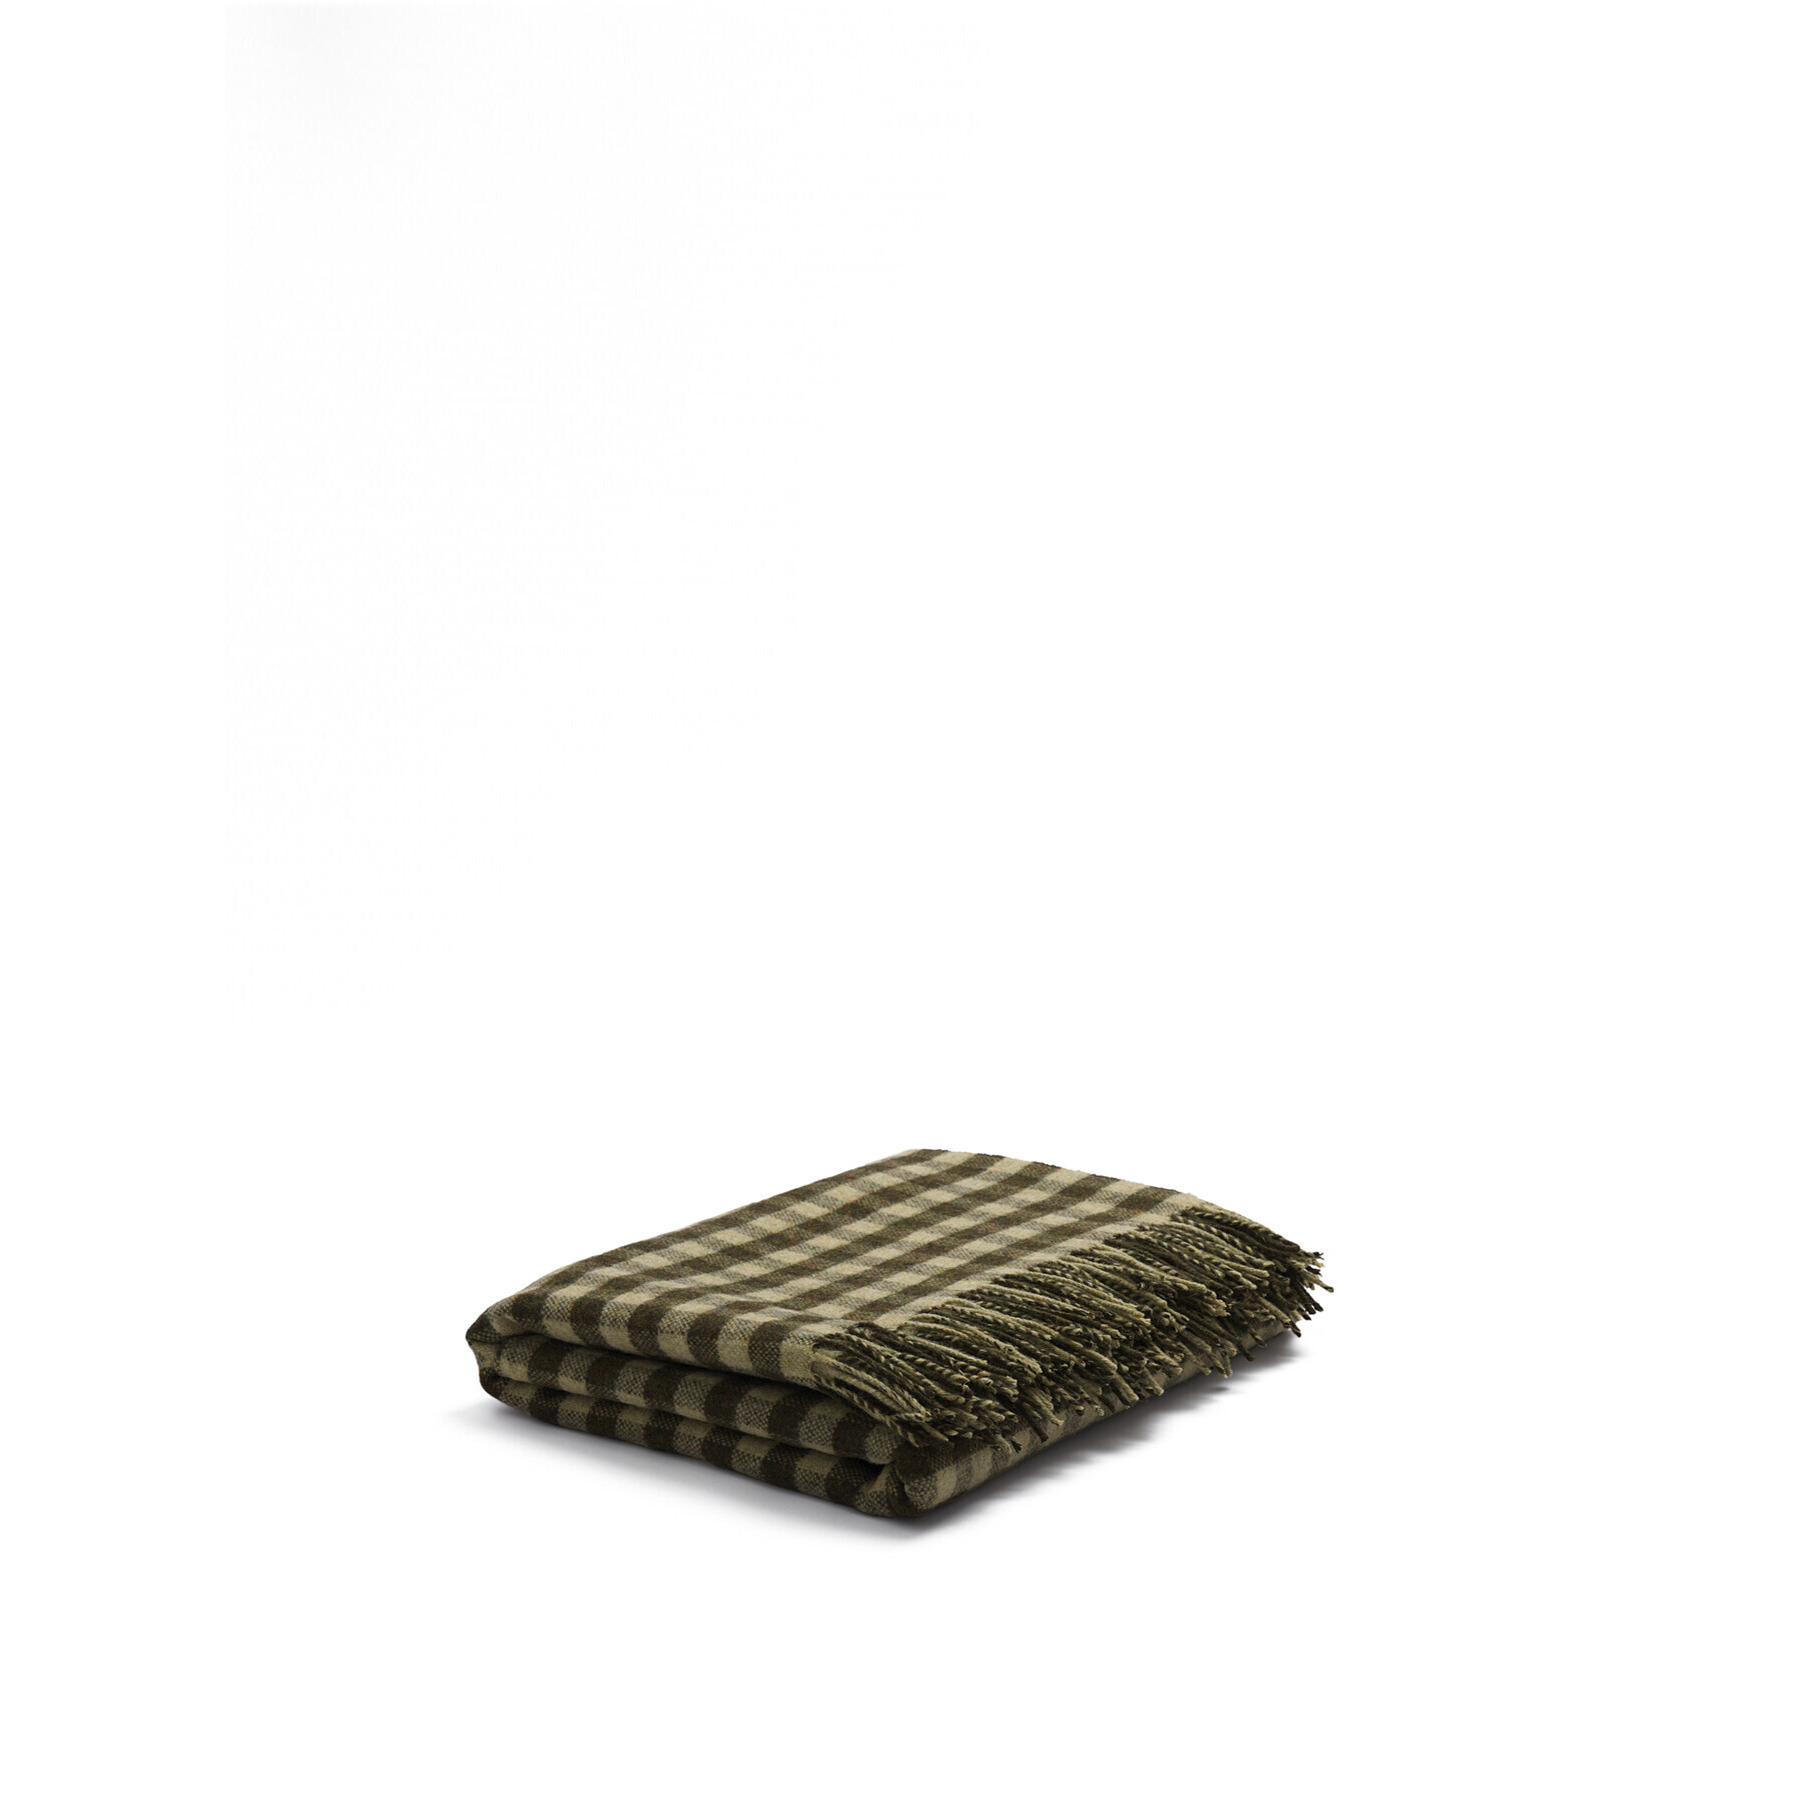 Piglet in Bed Merino Wool Blanket - Size 140x220cm Green - image 1